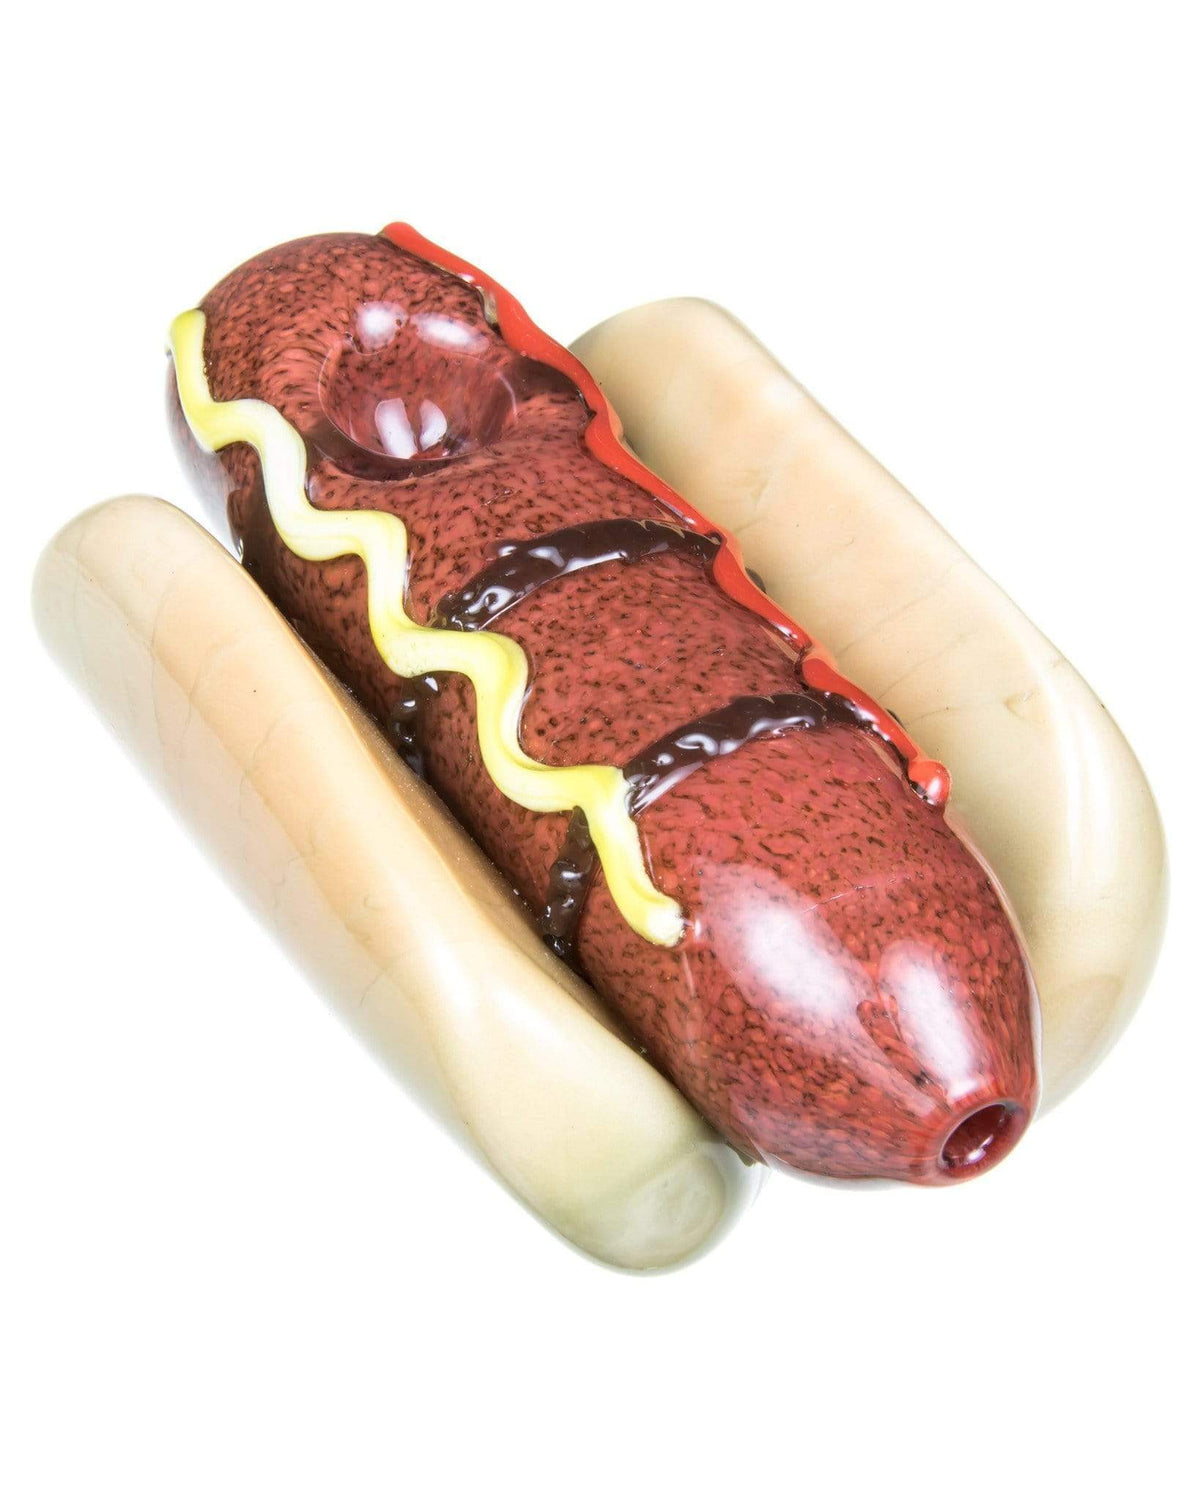 hot dog themed glass